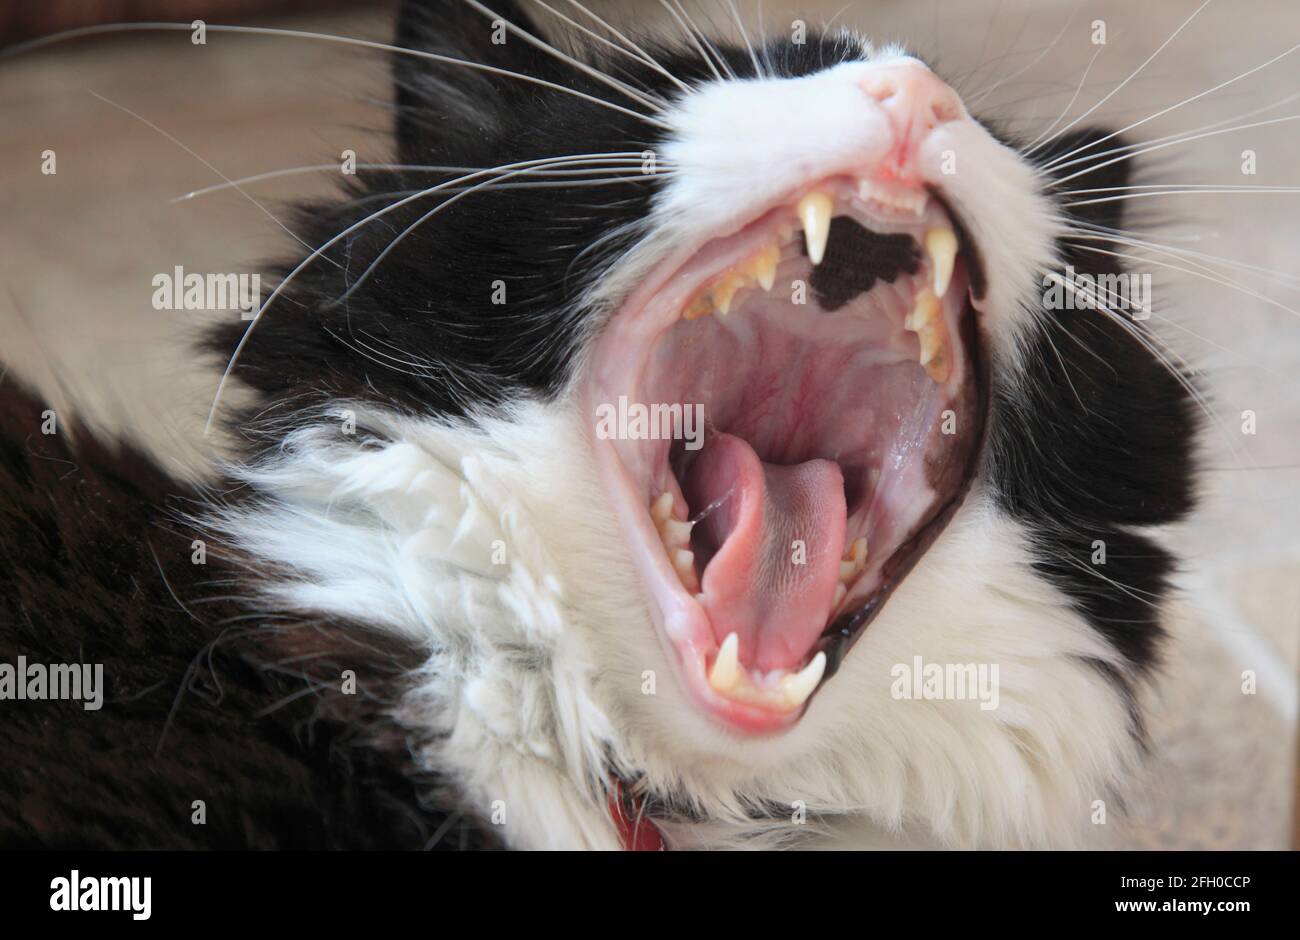 Black and white cat, yawning, Stock Photo